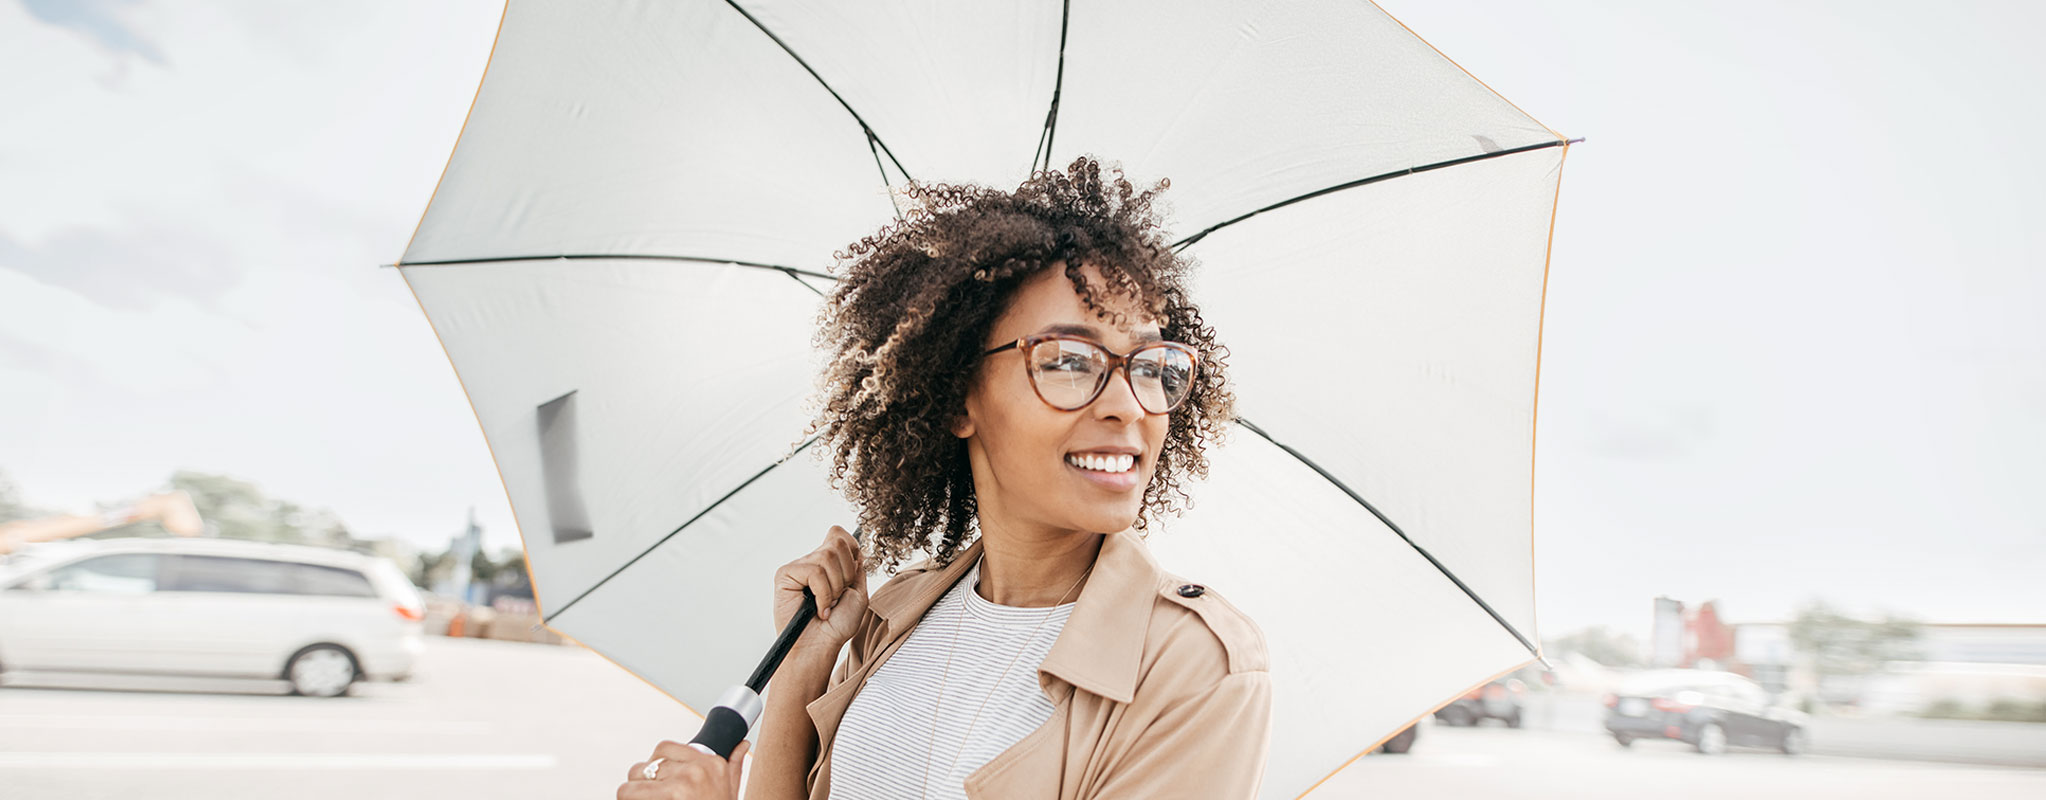 woman holding umbrella smiling